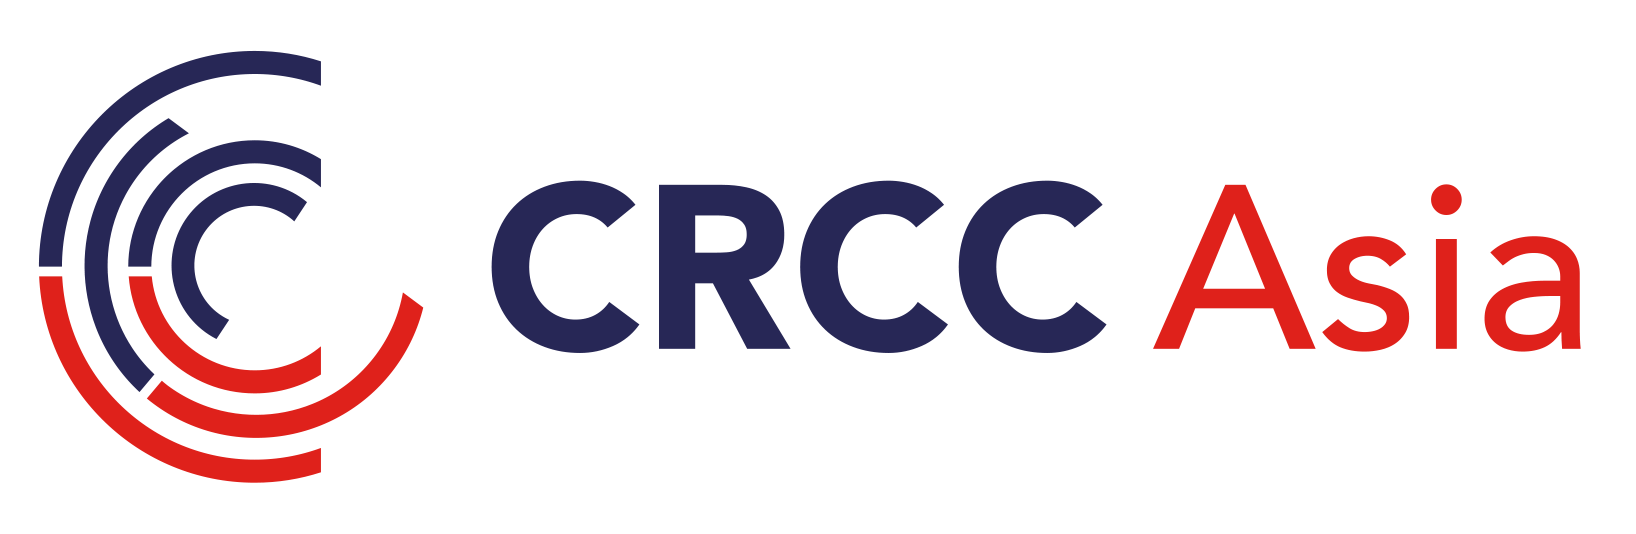 Asia Logo - Internships Abroad | The World's Leading Provider | CRCC Asia